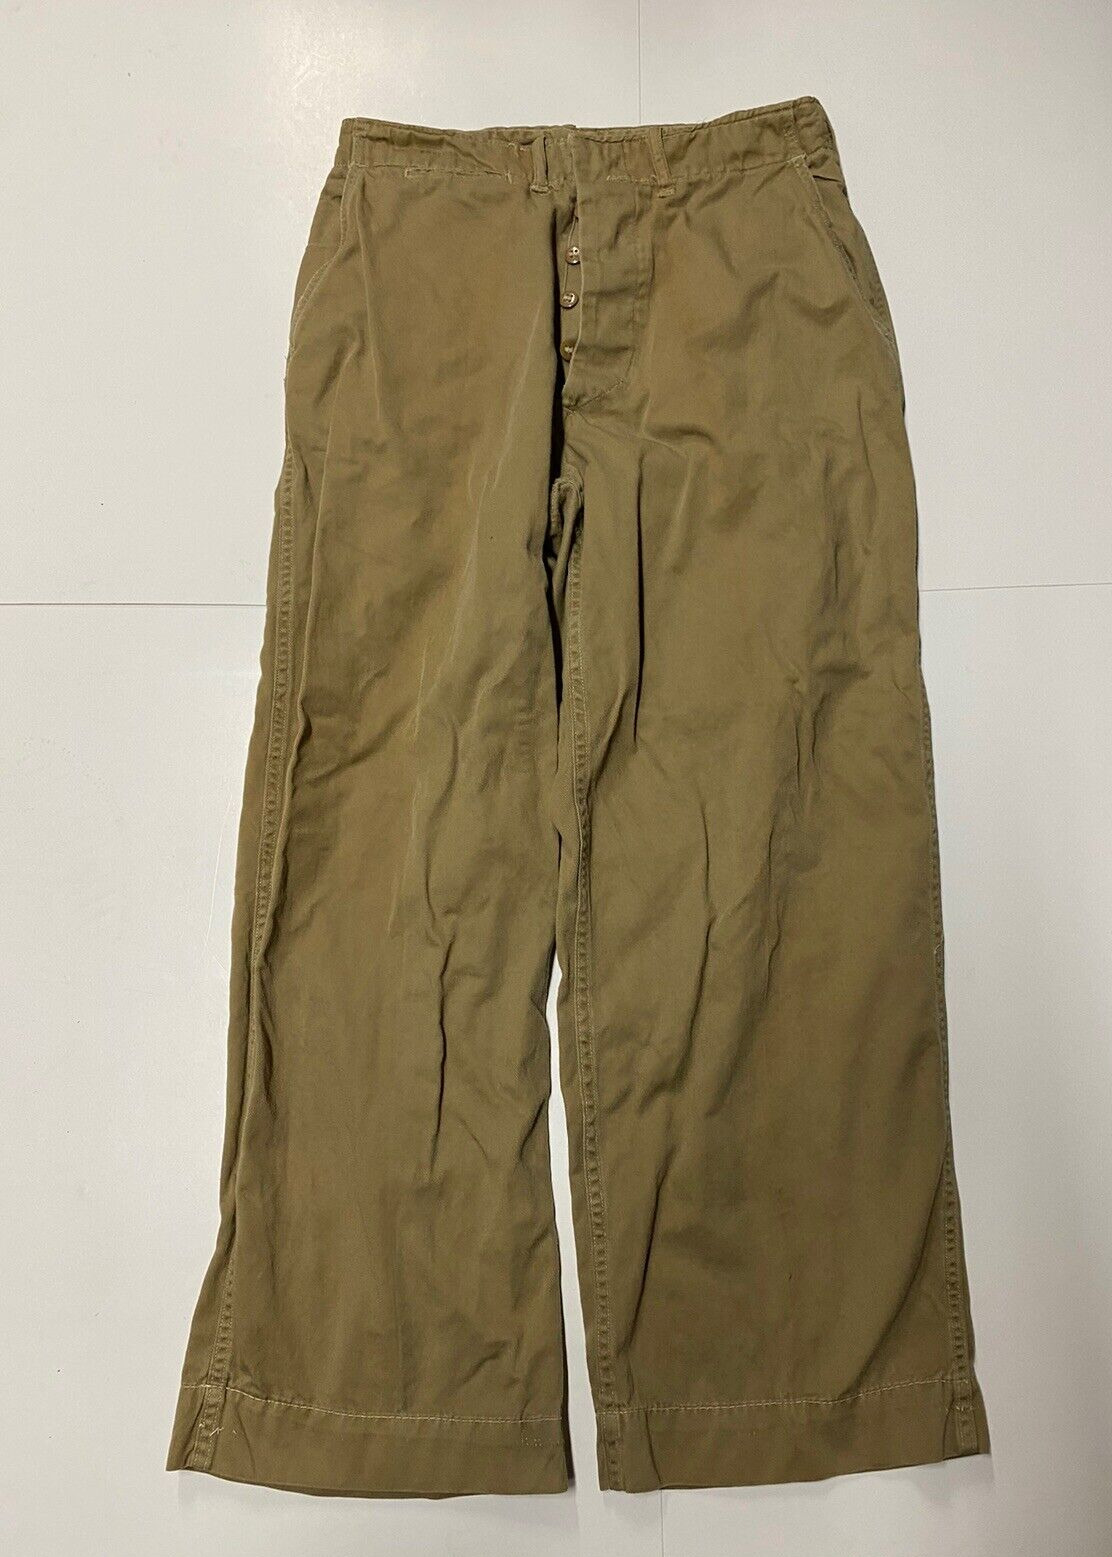 Vintage WW2 Pants Size 28 X 27 Khaki Twill Cotton 1940s Button Fly USMC